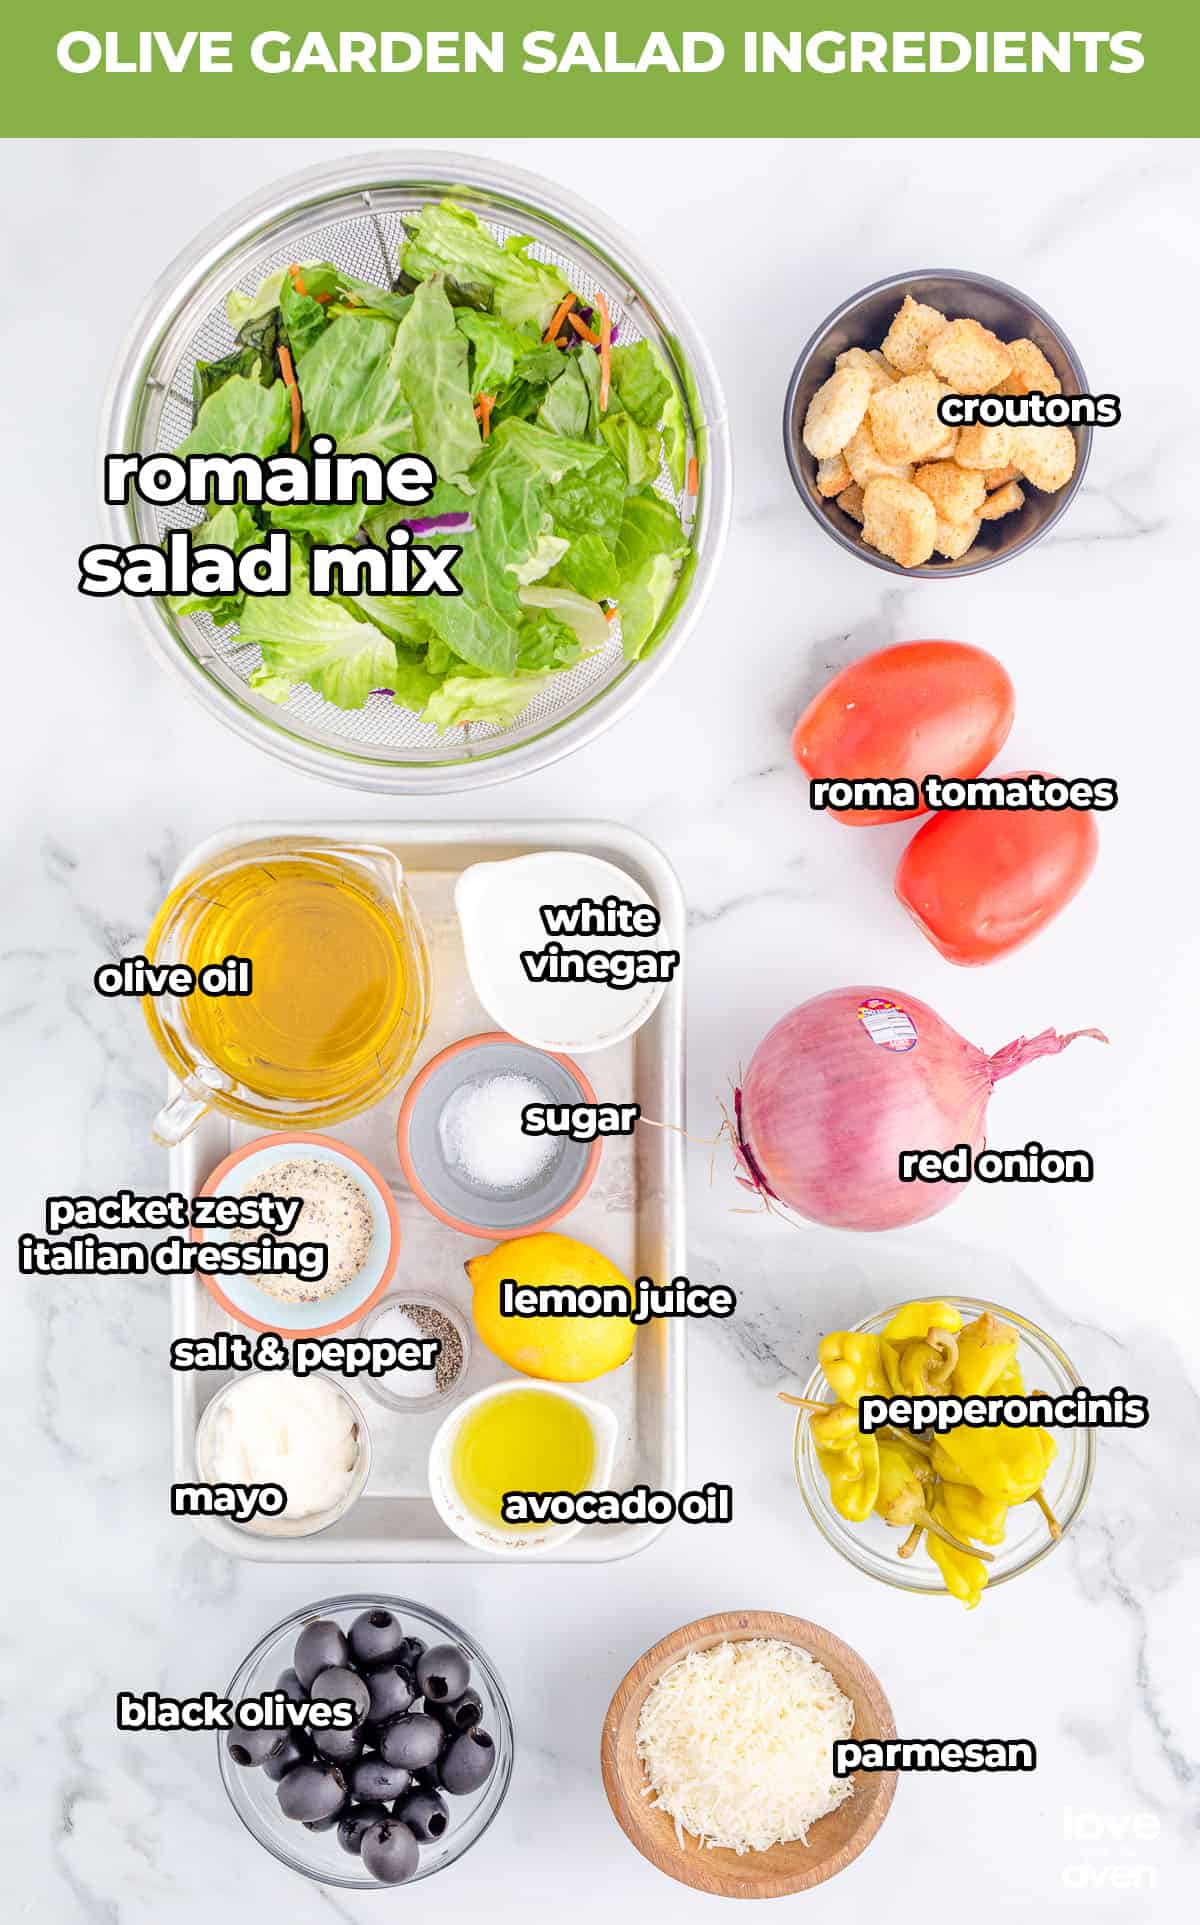 CopyCat Olive Garden Salad Dressing Recipe - CincyShopper